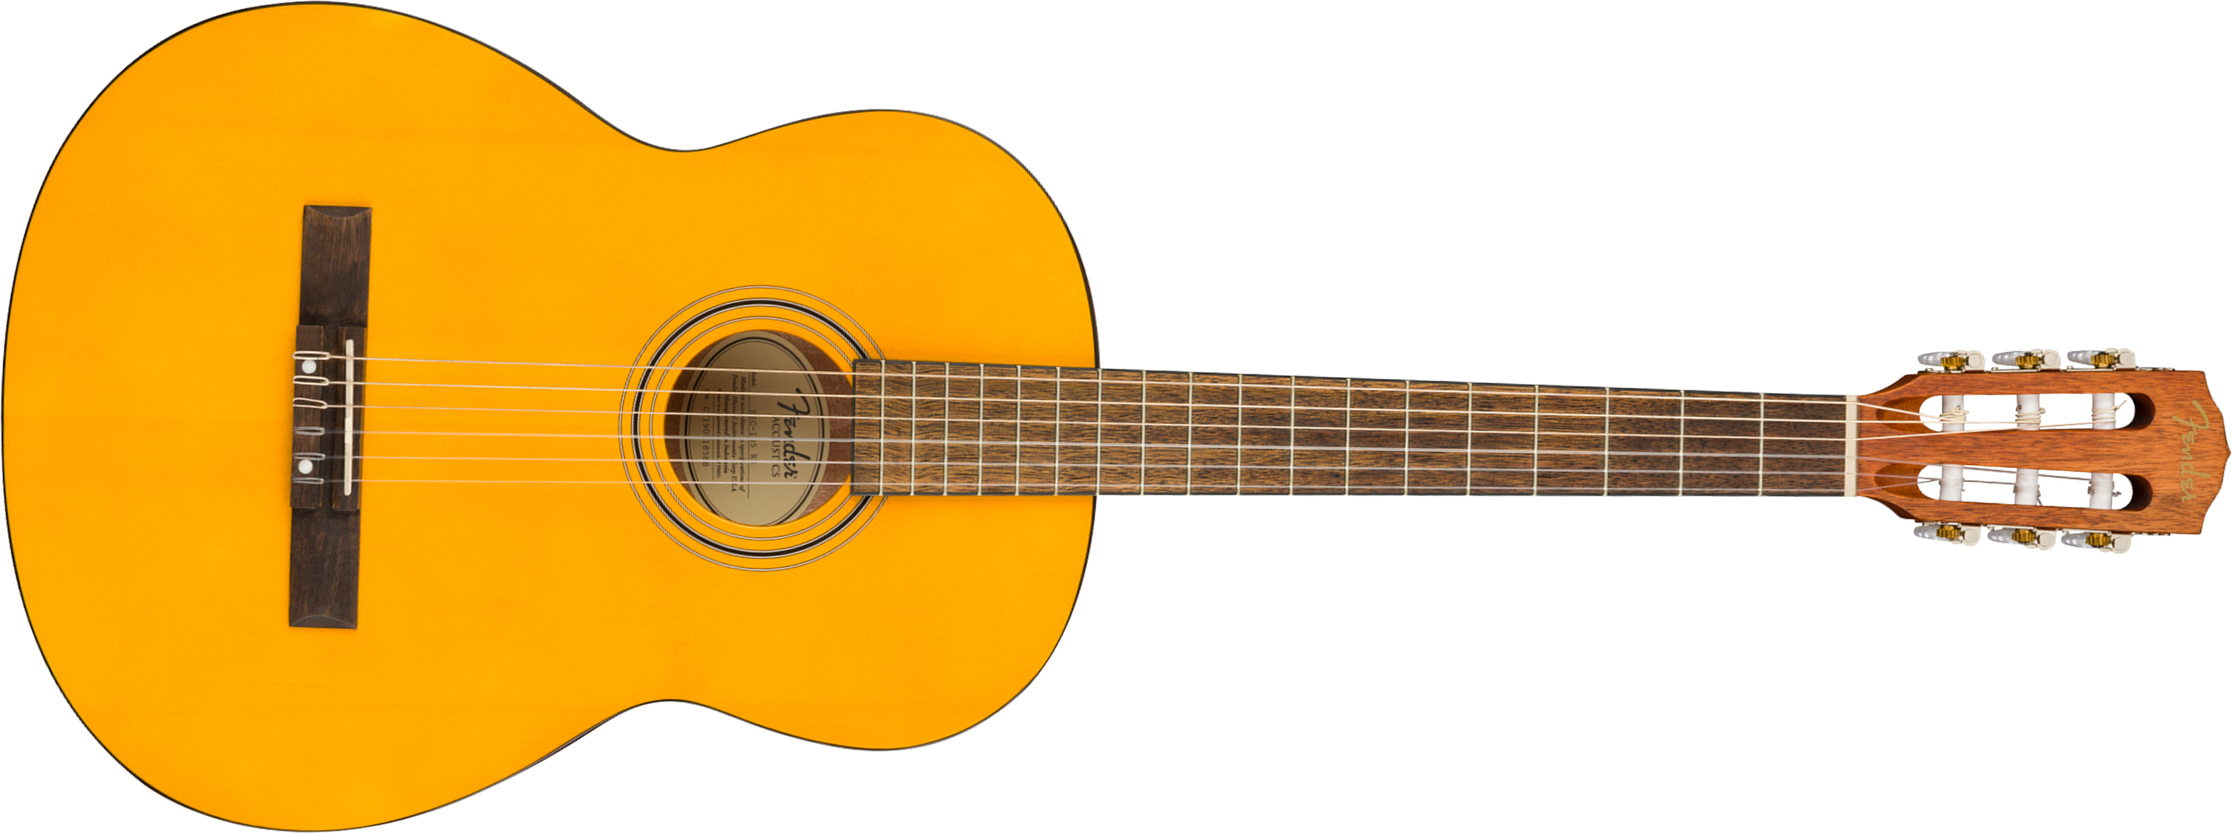 Fender Esc-105 Classical Educational Tout Okoume Noy - Vintage Natural Satin - Klassieke gitaar 4/4 - Main picture